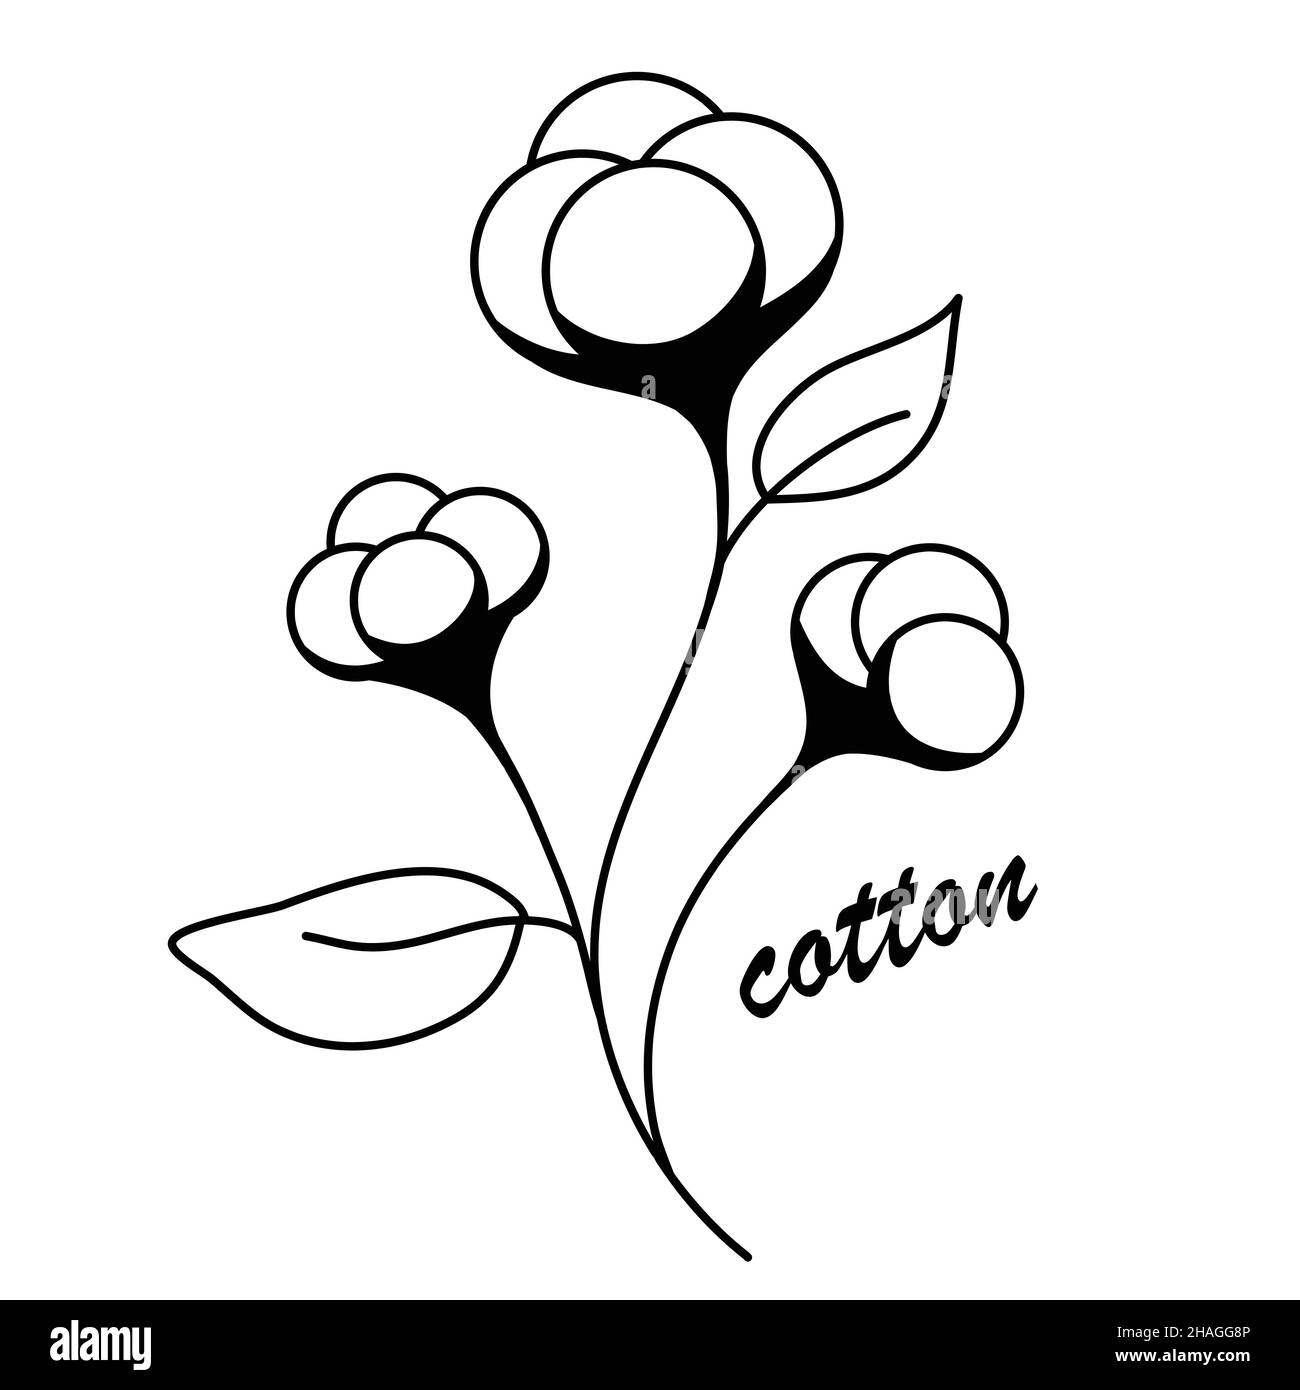 Ripe cotton, white cotton boll organic shape, simple outline object plant vector illustration Stock Vector